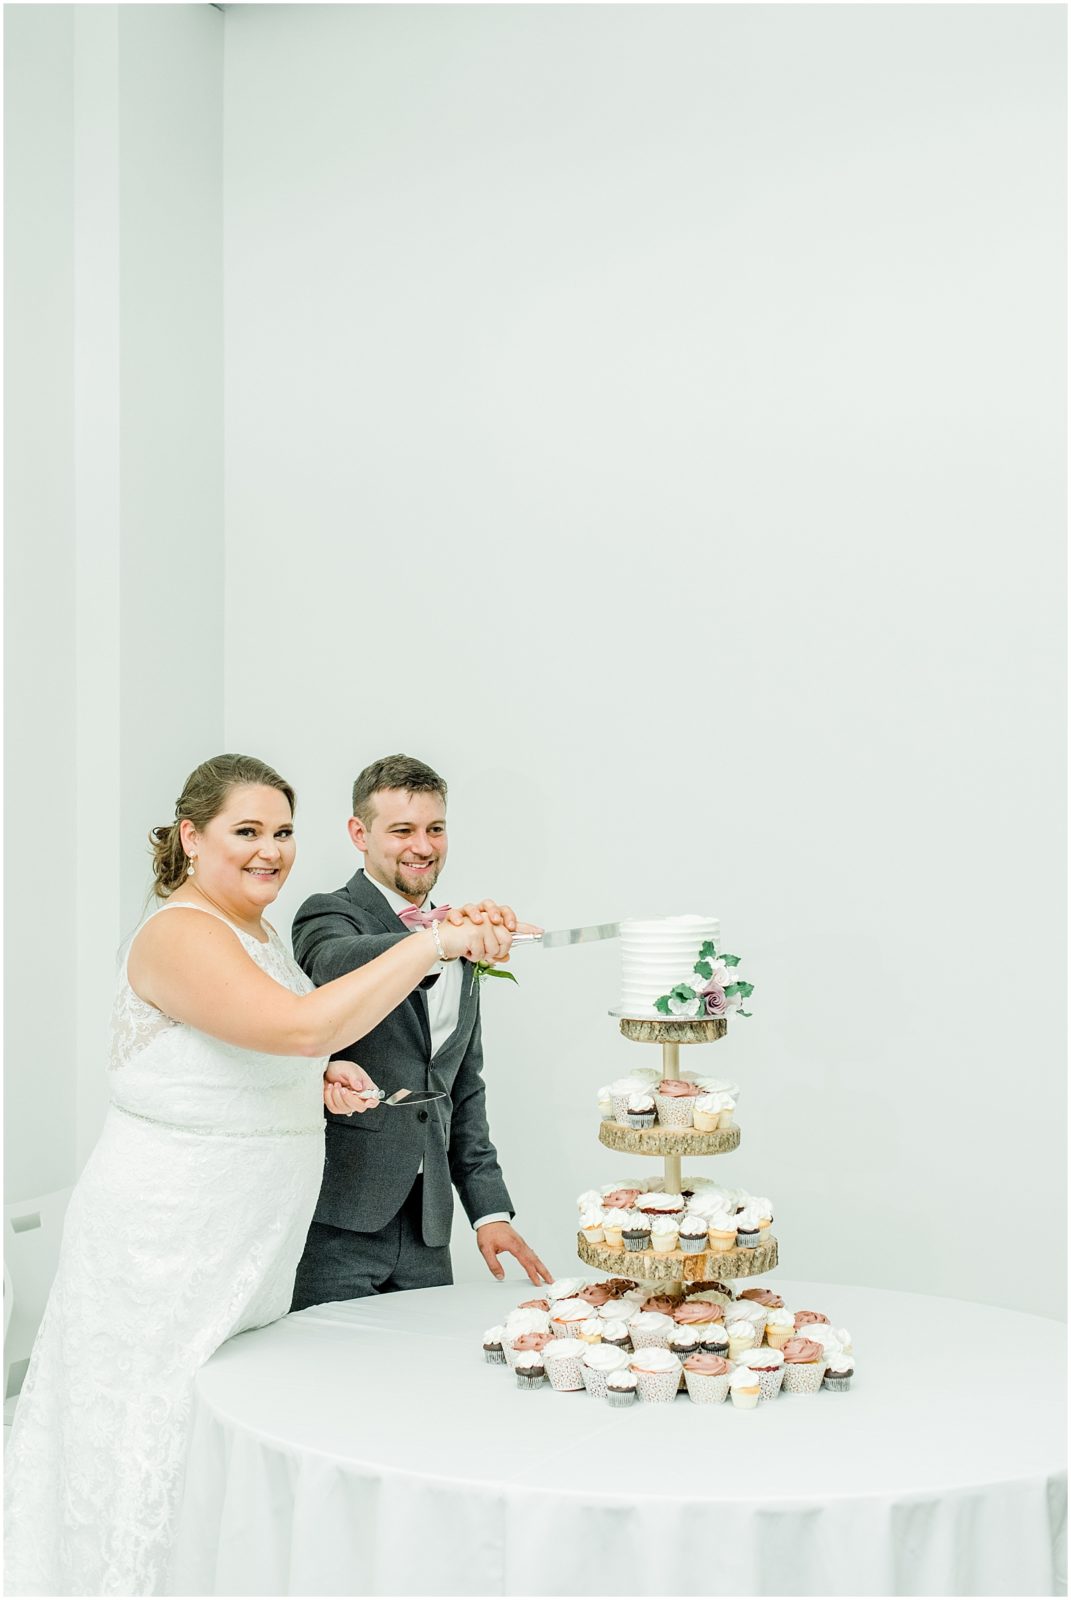 Goodwill Industries Wedding cake cutting